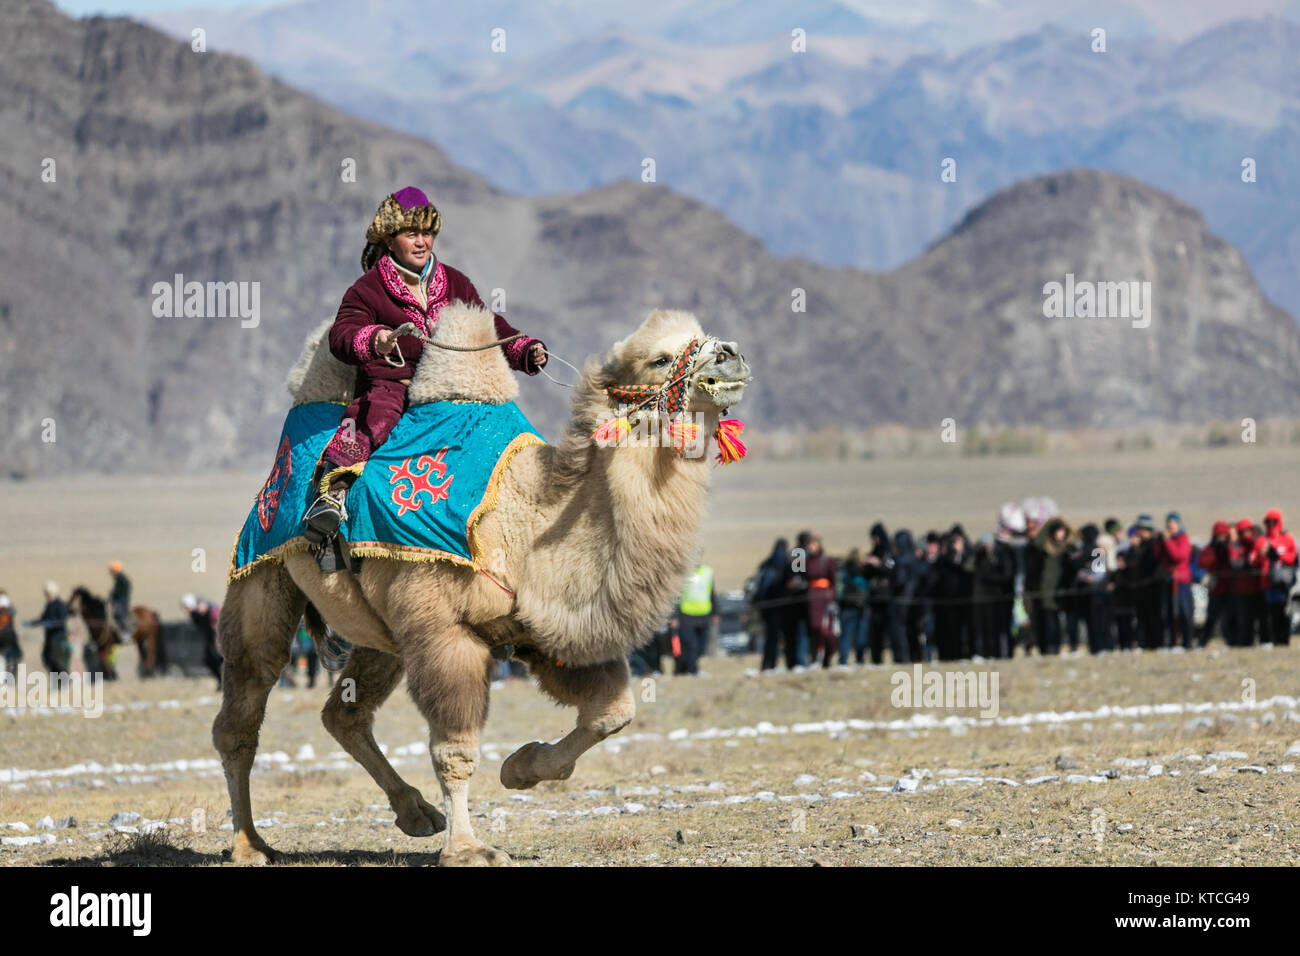 Jinete de camellos en el Festival Golden Eagle en Mongolia Foto de stock